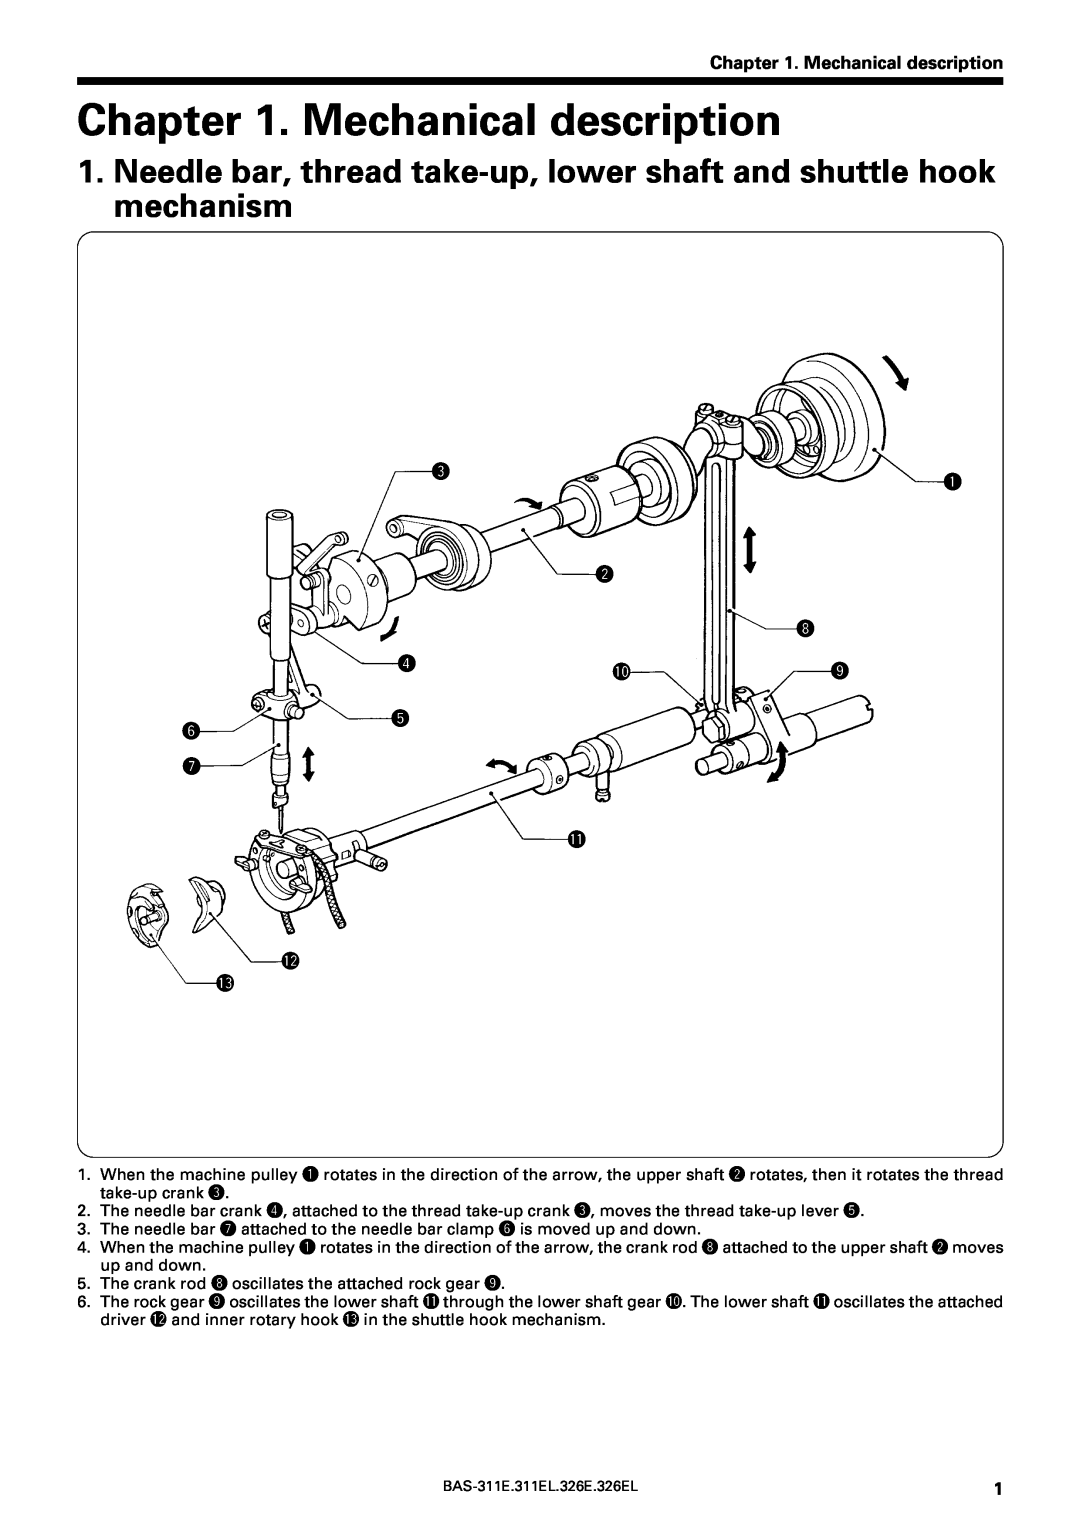 Brother BAS-311E service manual Mechanical description, Needle bar, thread take-up, lower shaft and shuttle hook mechanism 